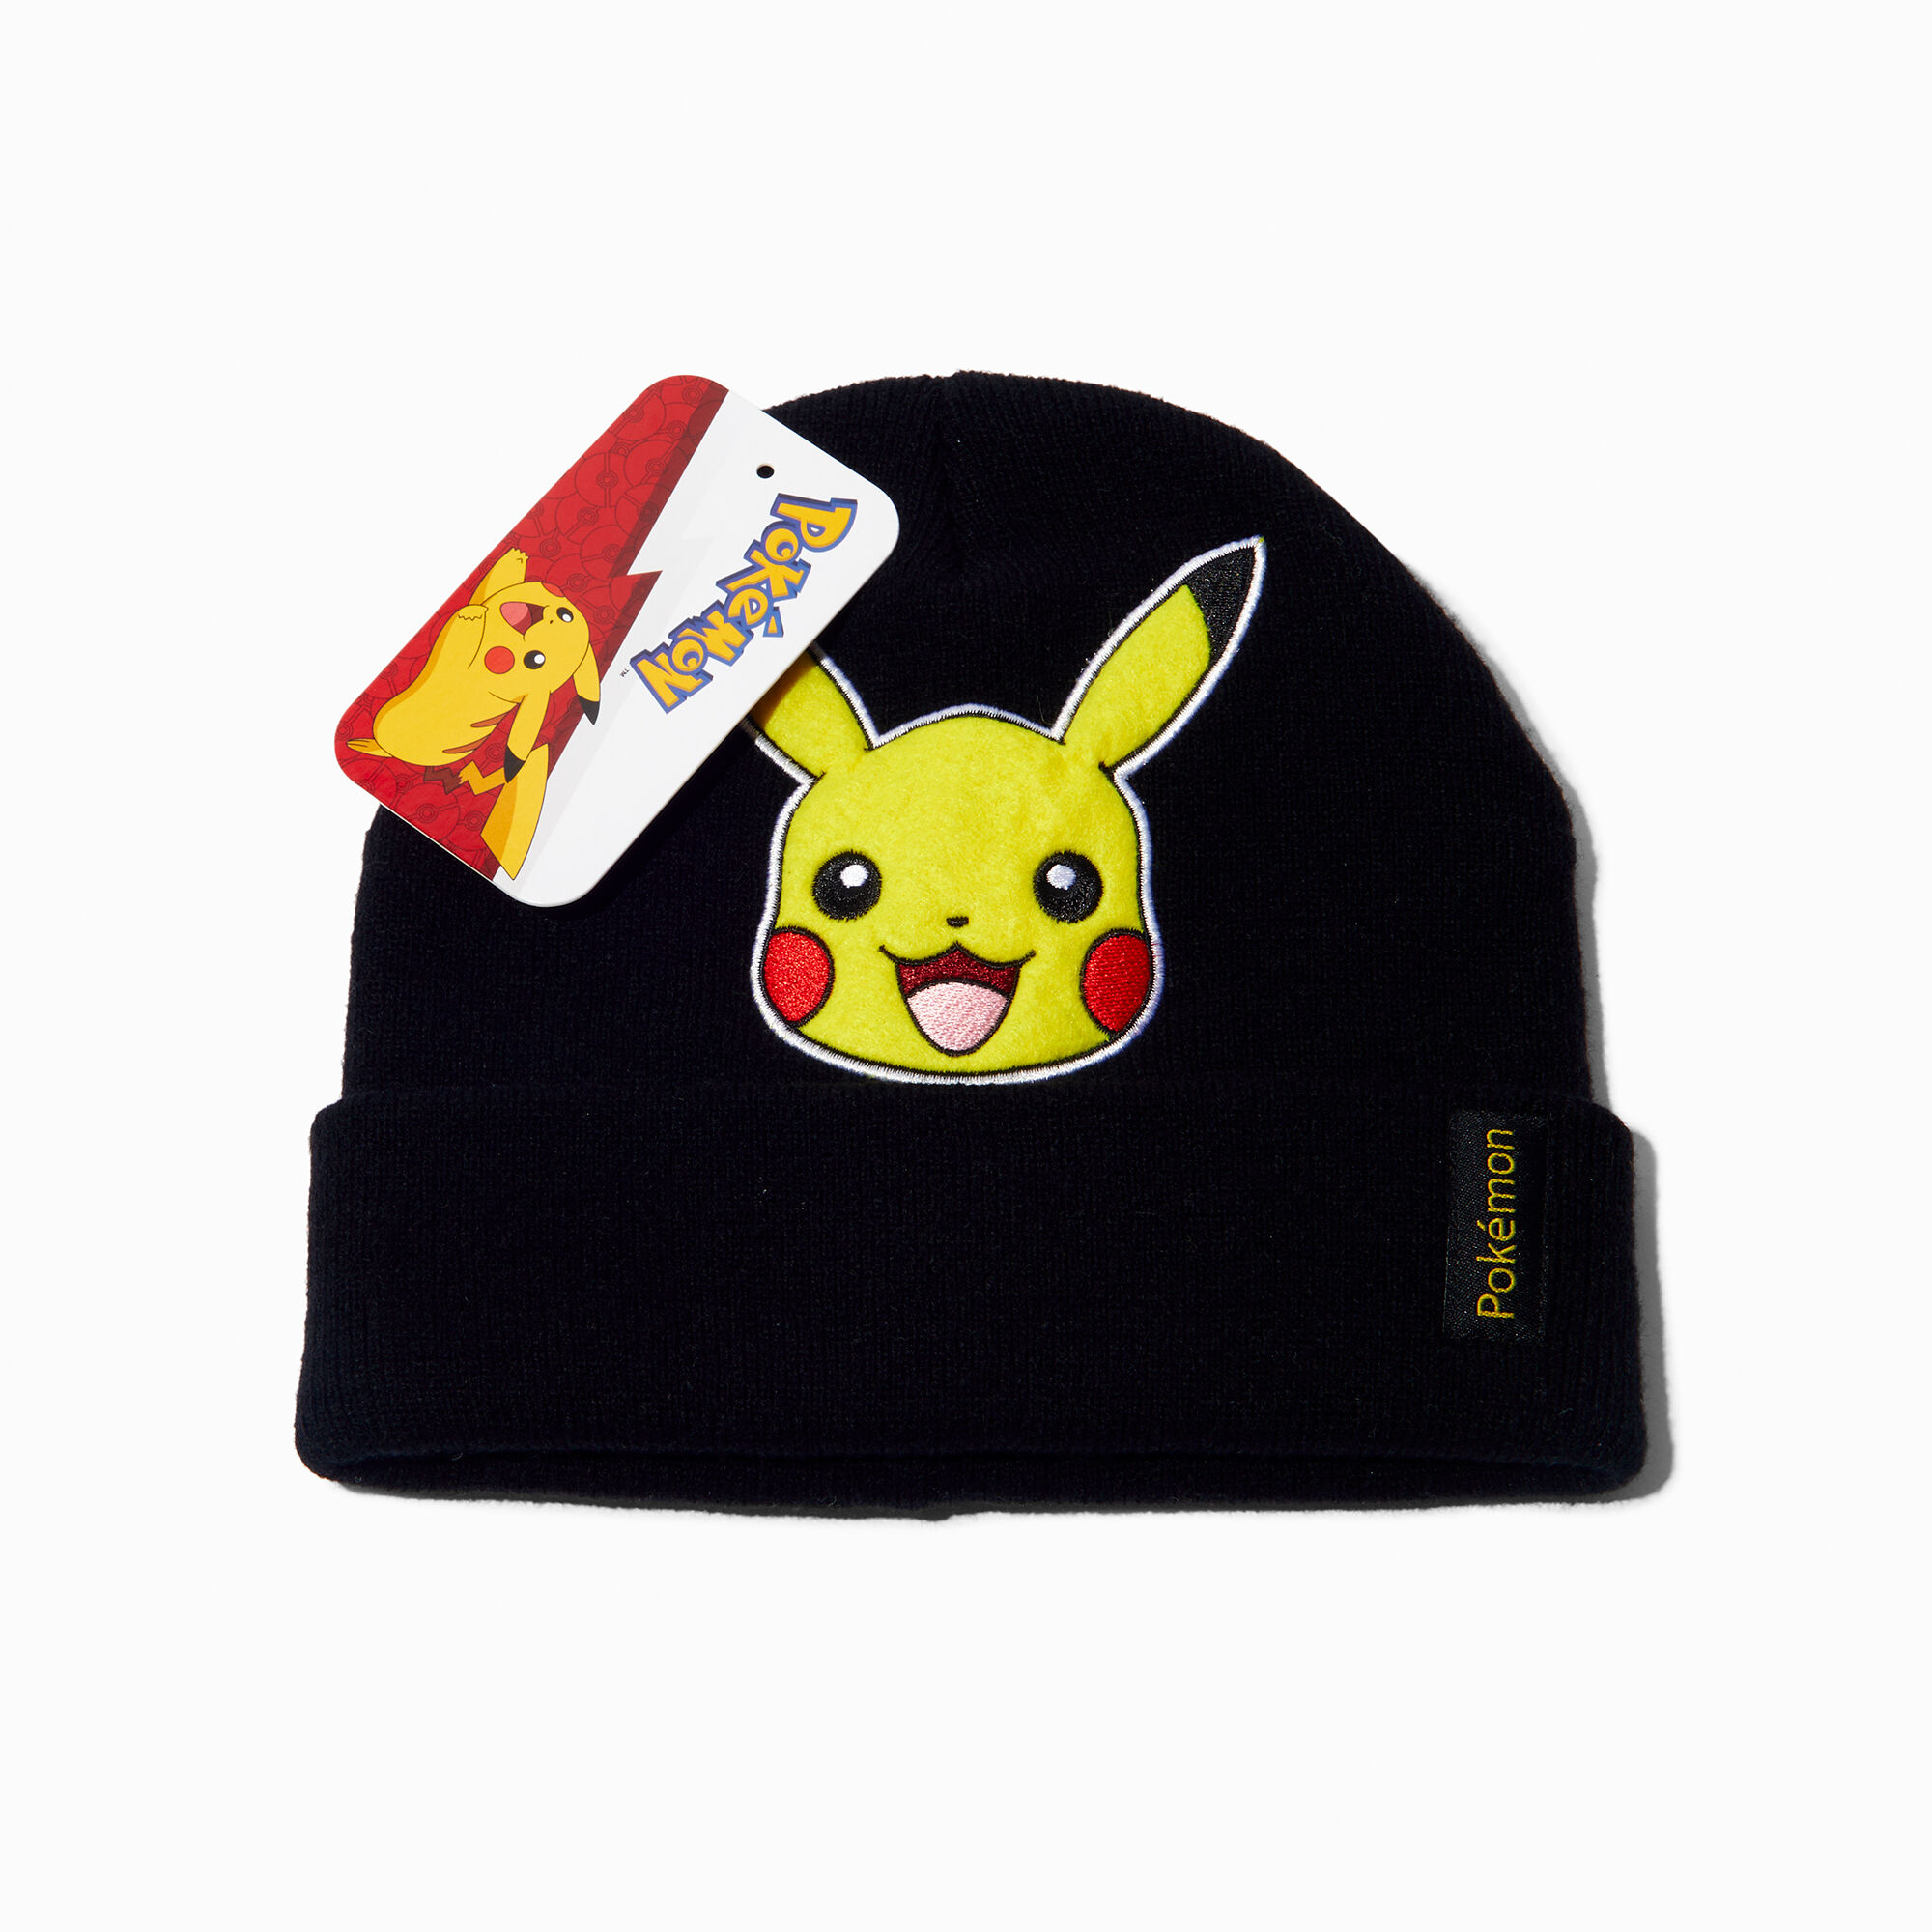 View Claires Pokémon Pikachu Beanie Hat Black information